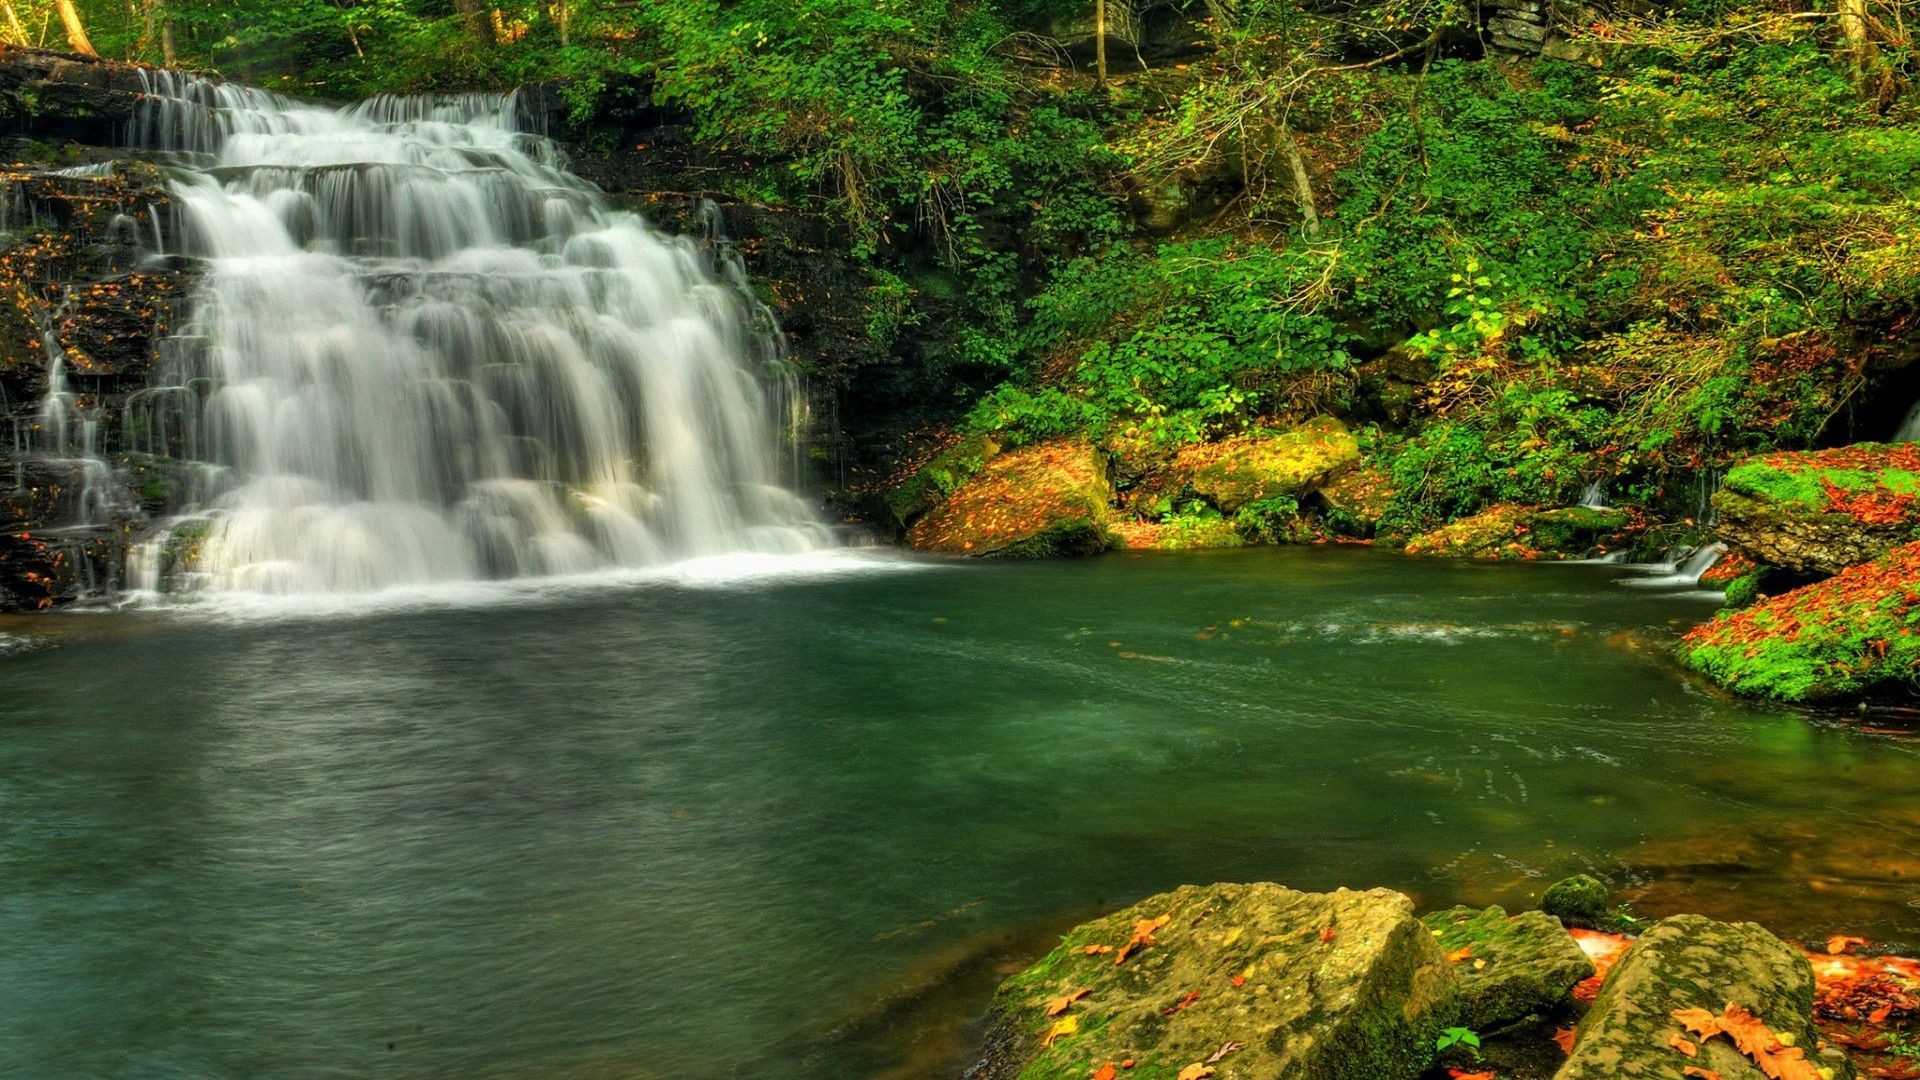 Waterfall hd image